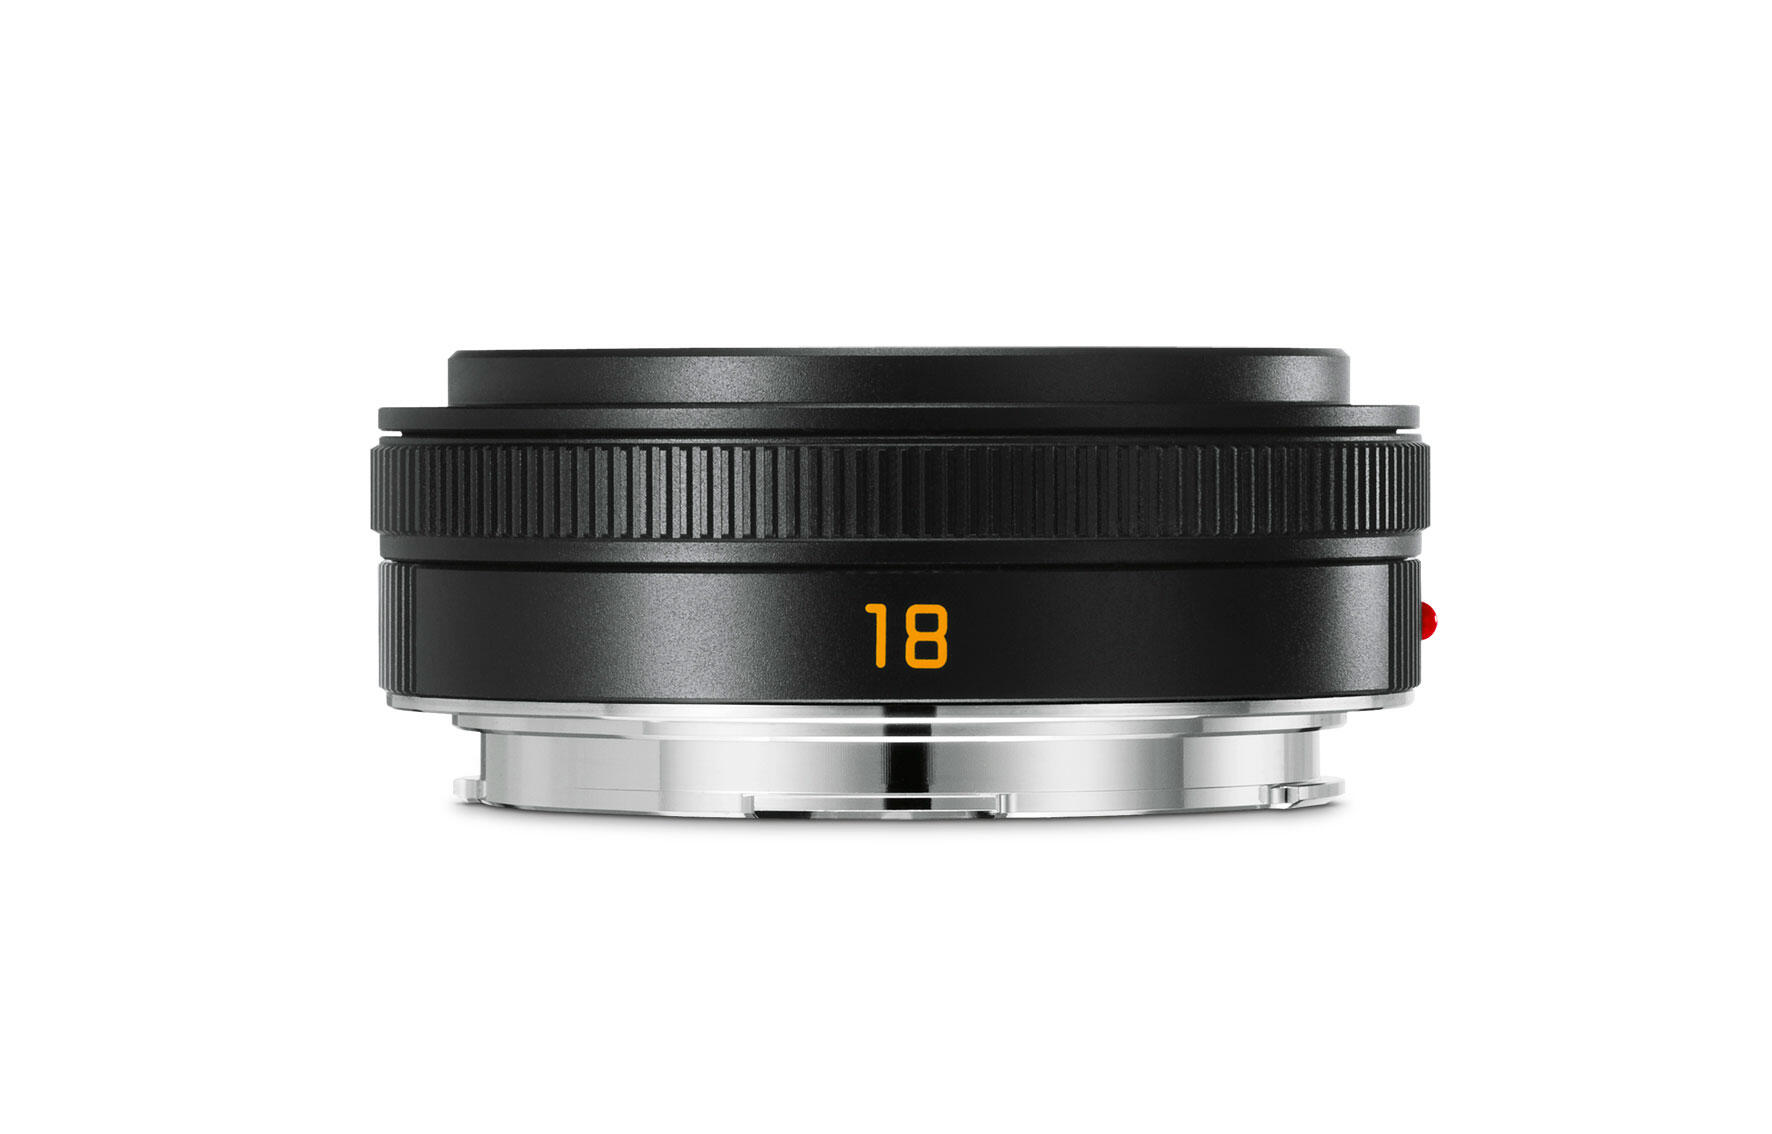 Elmarit-TL 18 f/2.8 ASPH. | Leica Camera UK